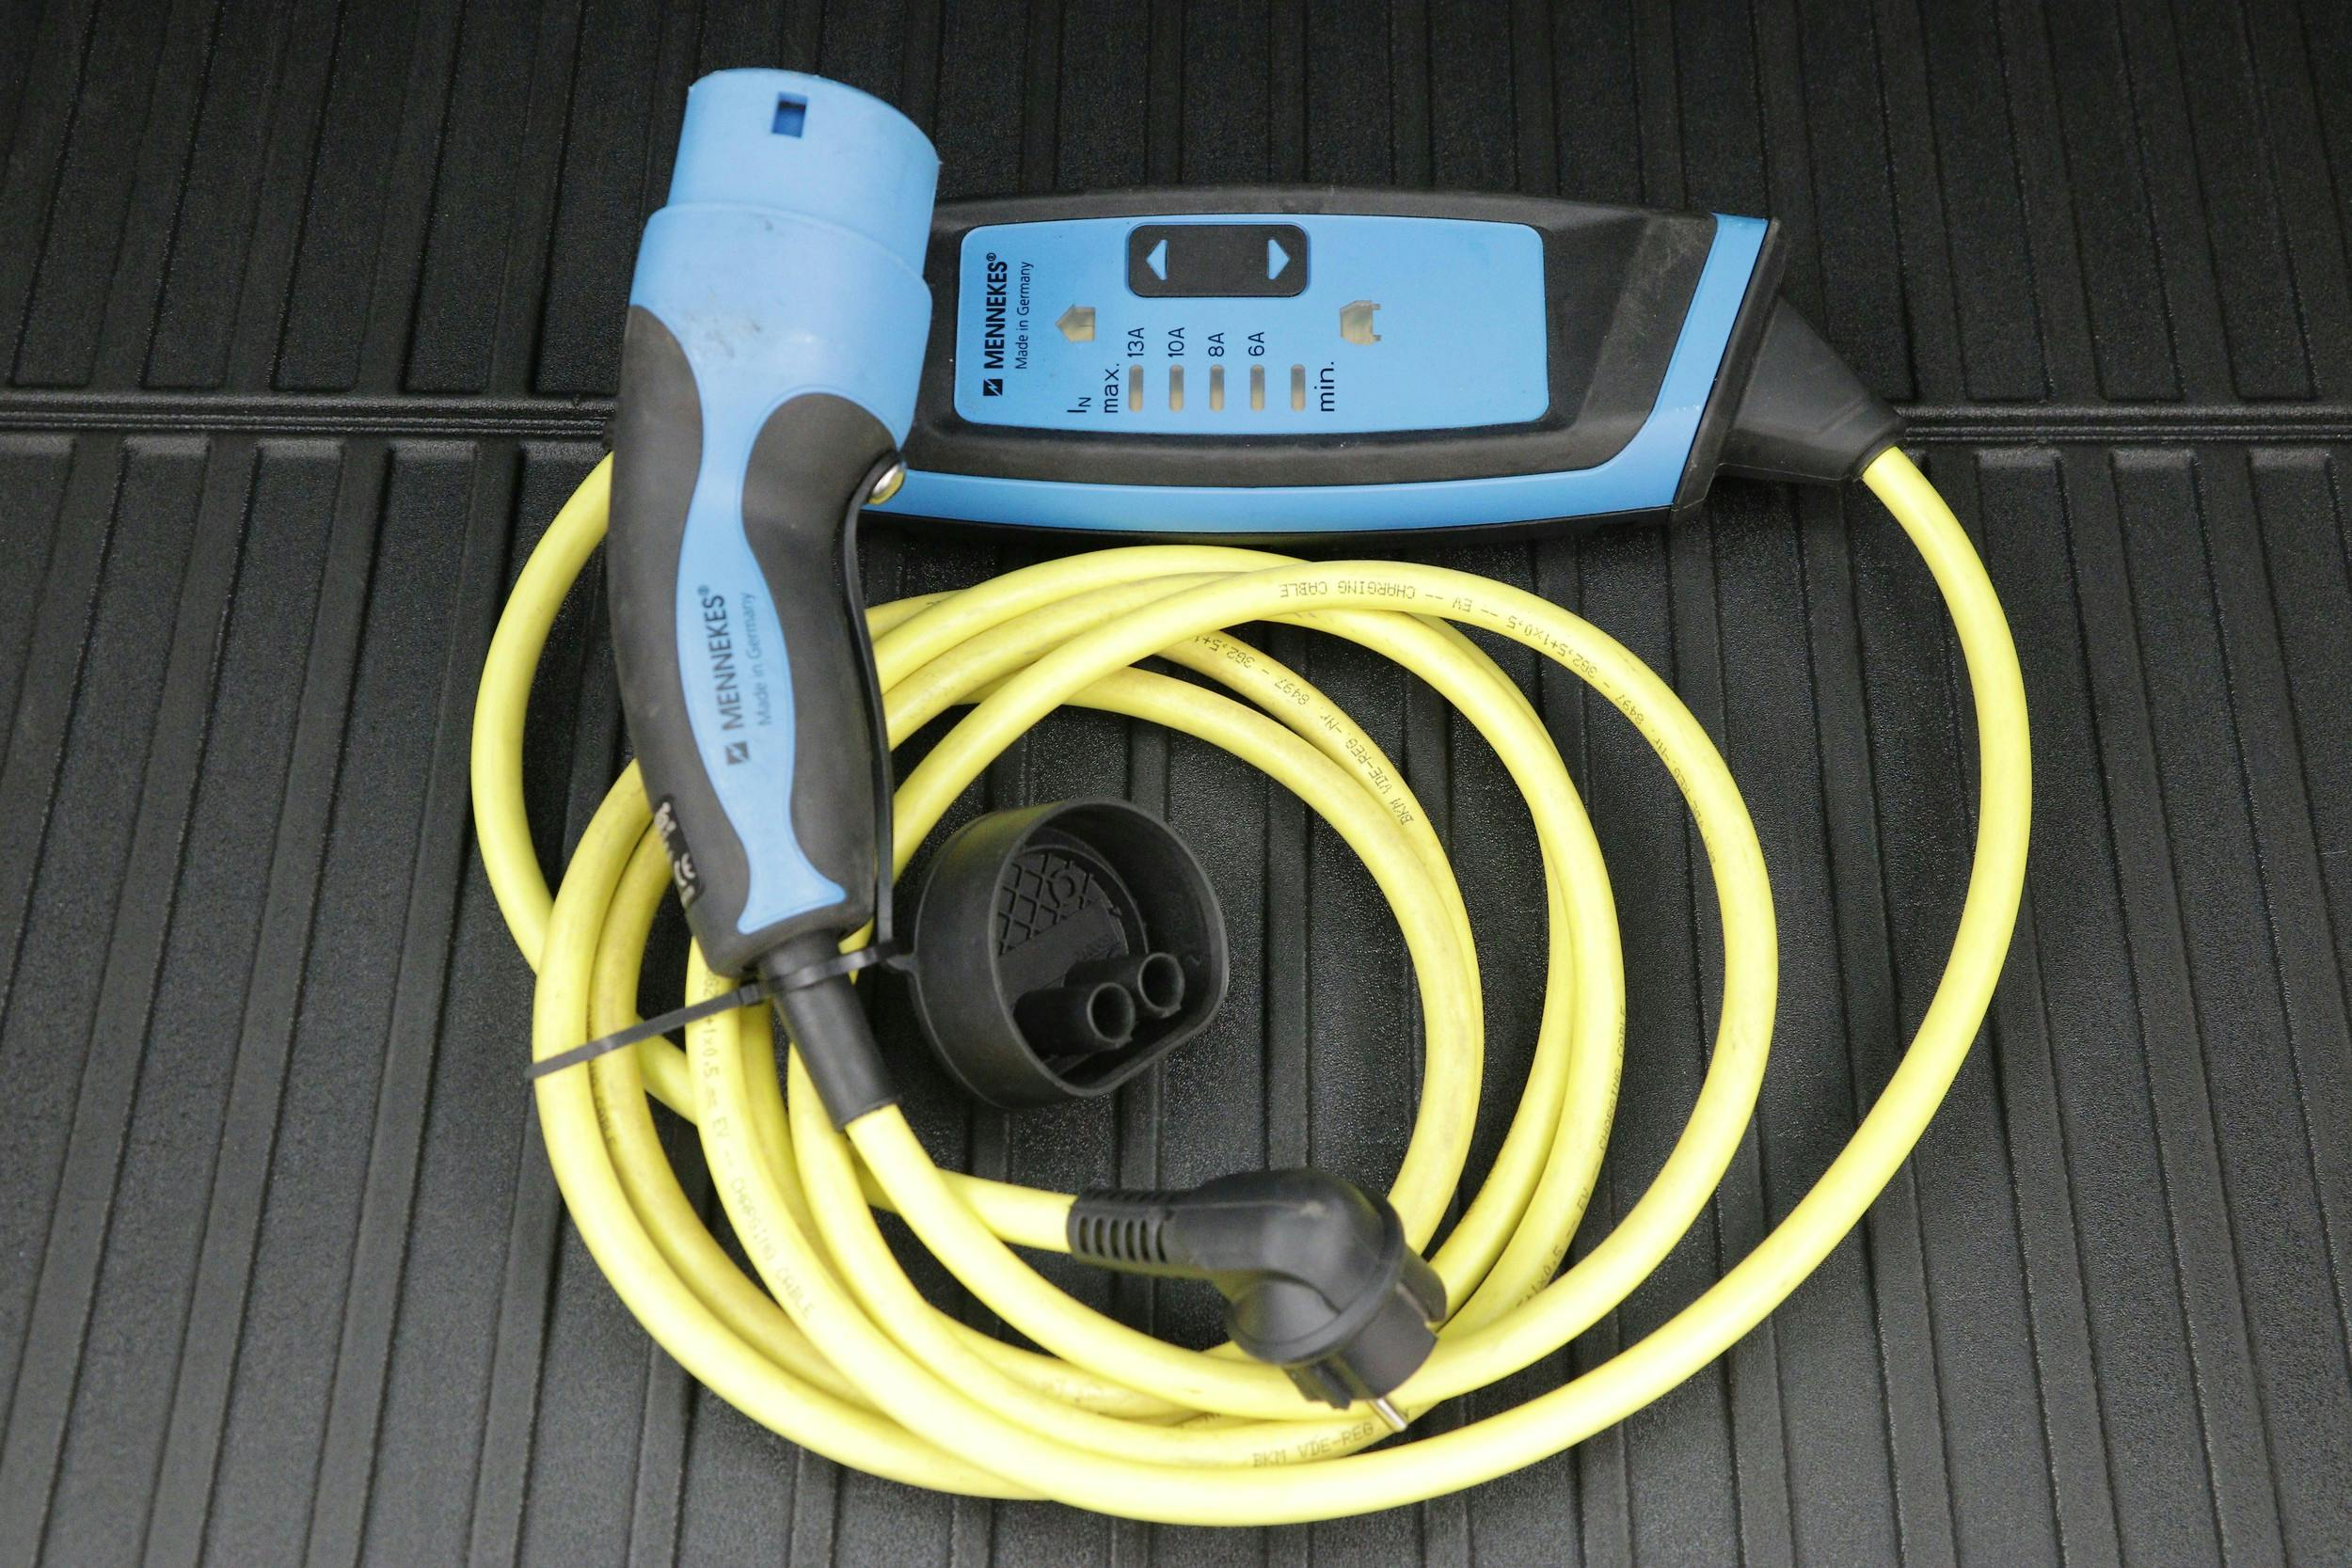 En laddningskabel med Typ 2-kontakt: för laddning i eluttag